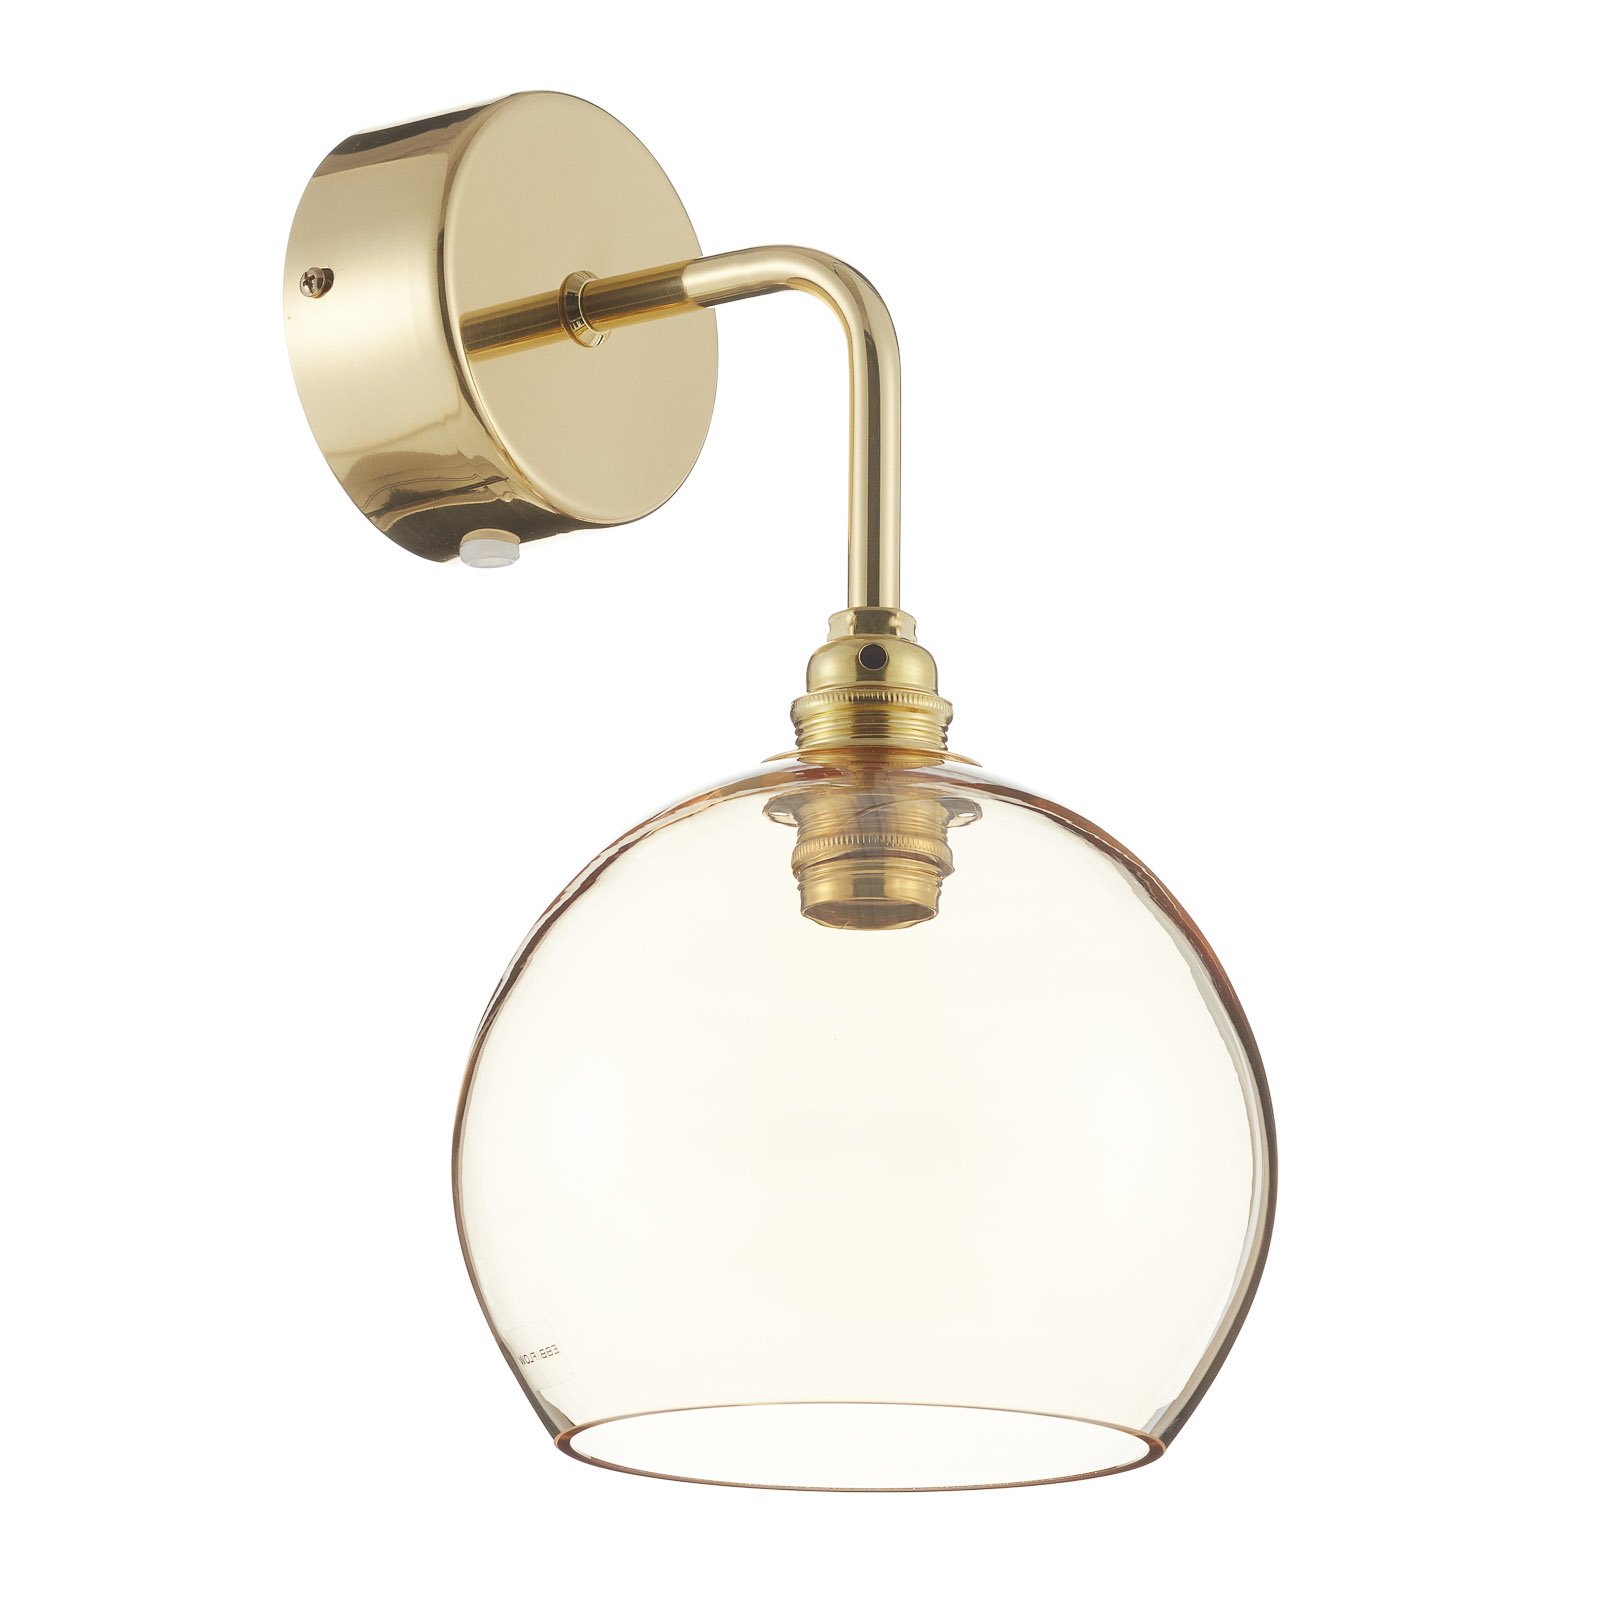 EBB & FLOW Rowan wandlamp goud kap goud-rook